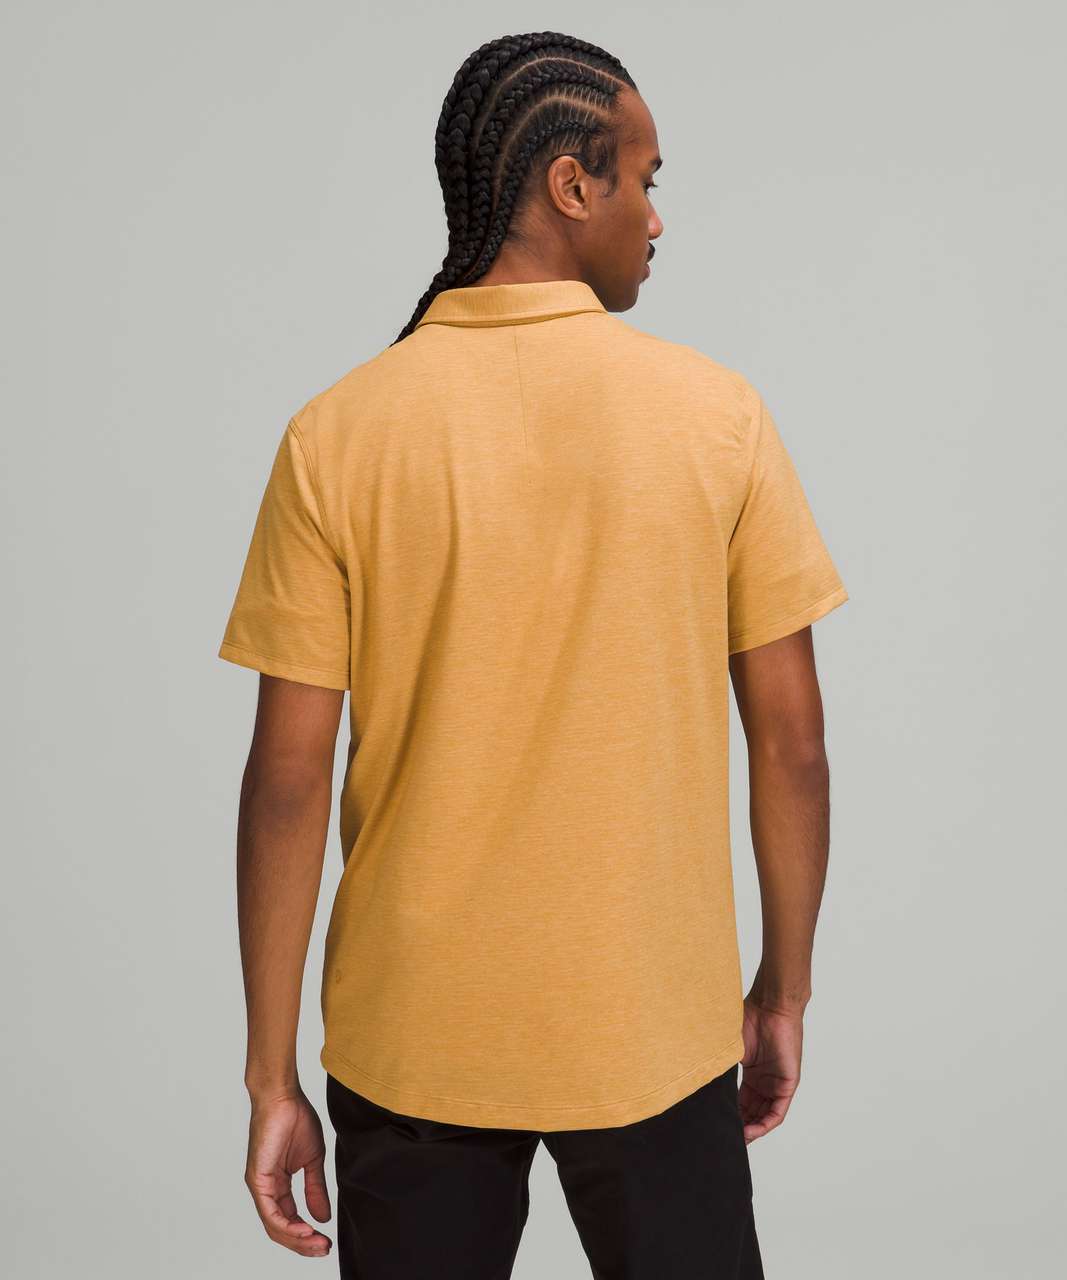 Lululemon Evolution Short Sleeve Polo Shirt - Heathered Parachute